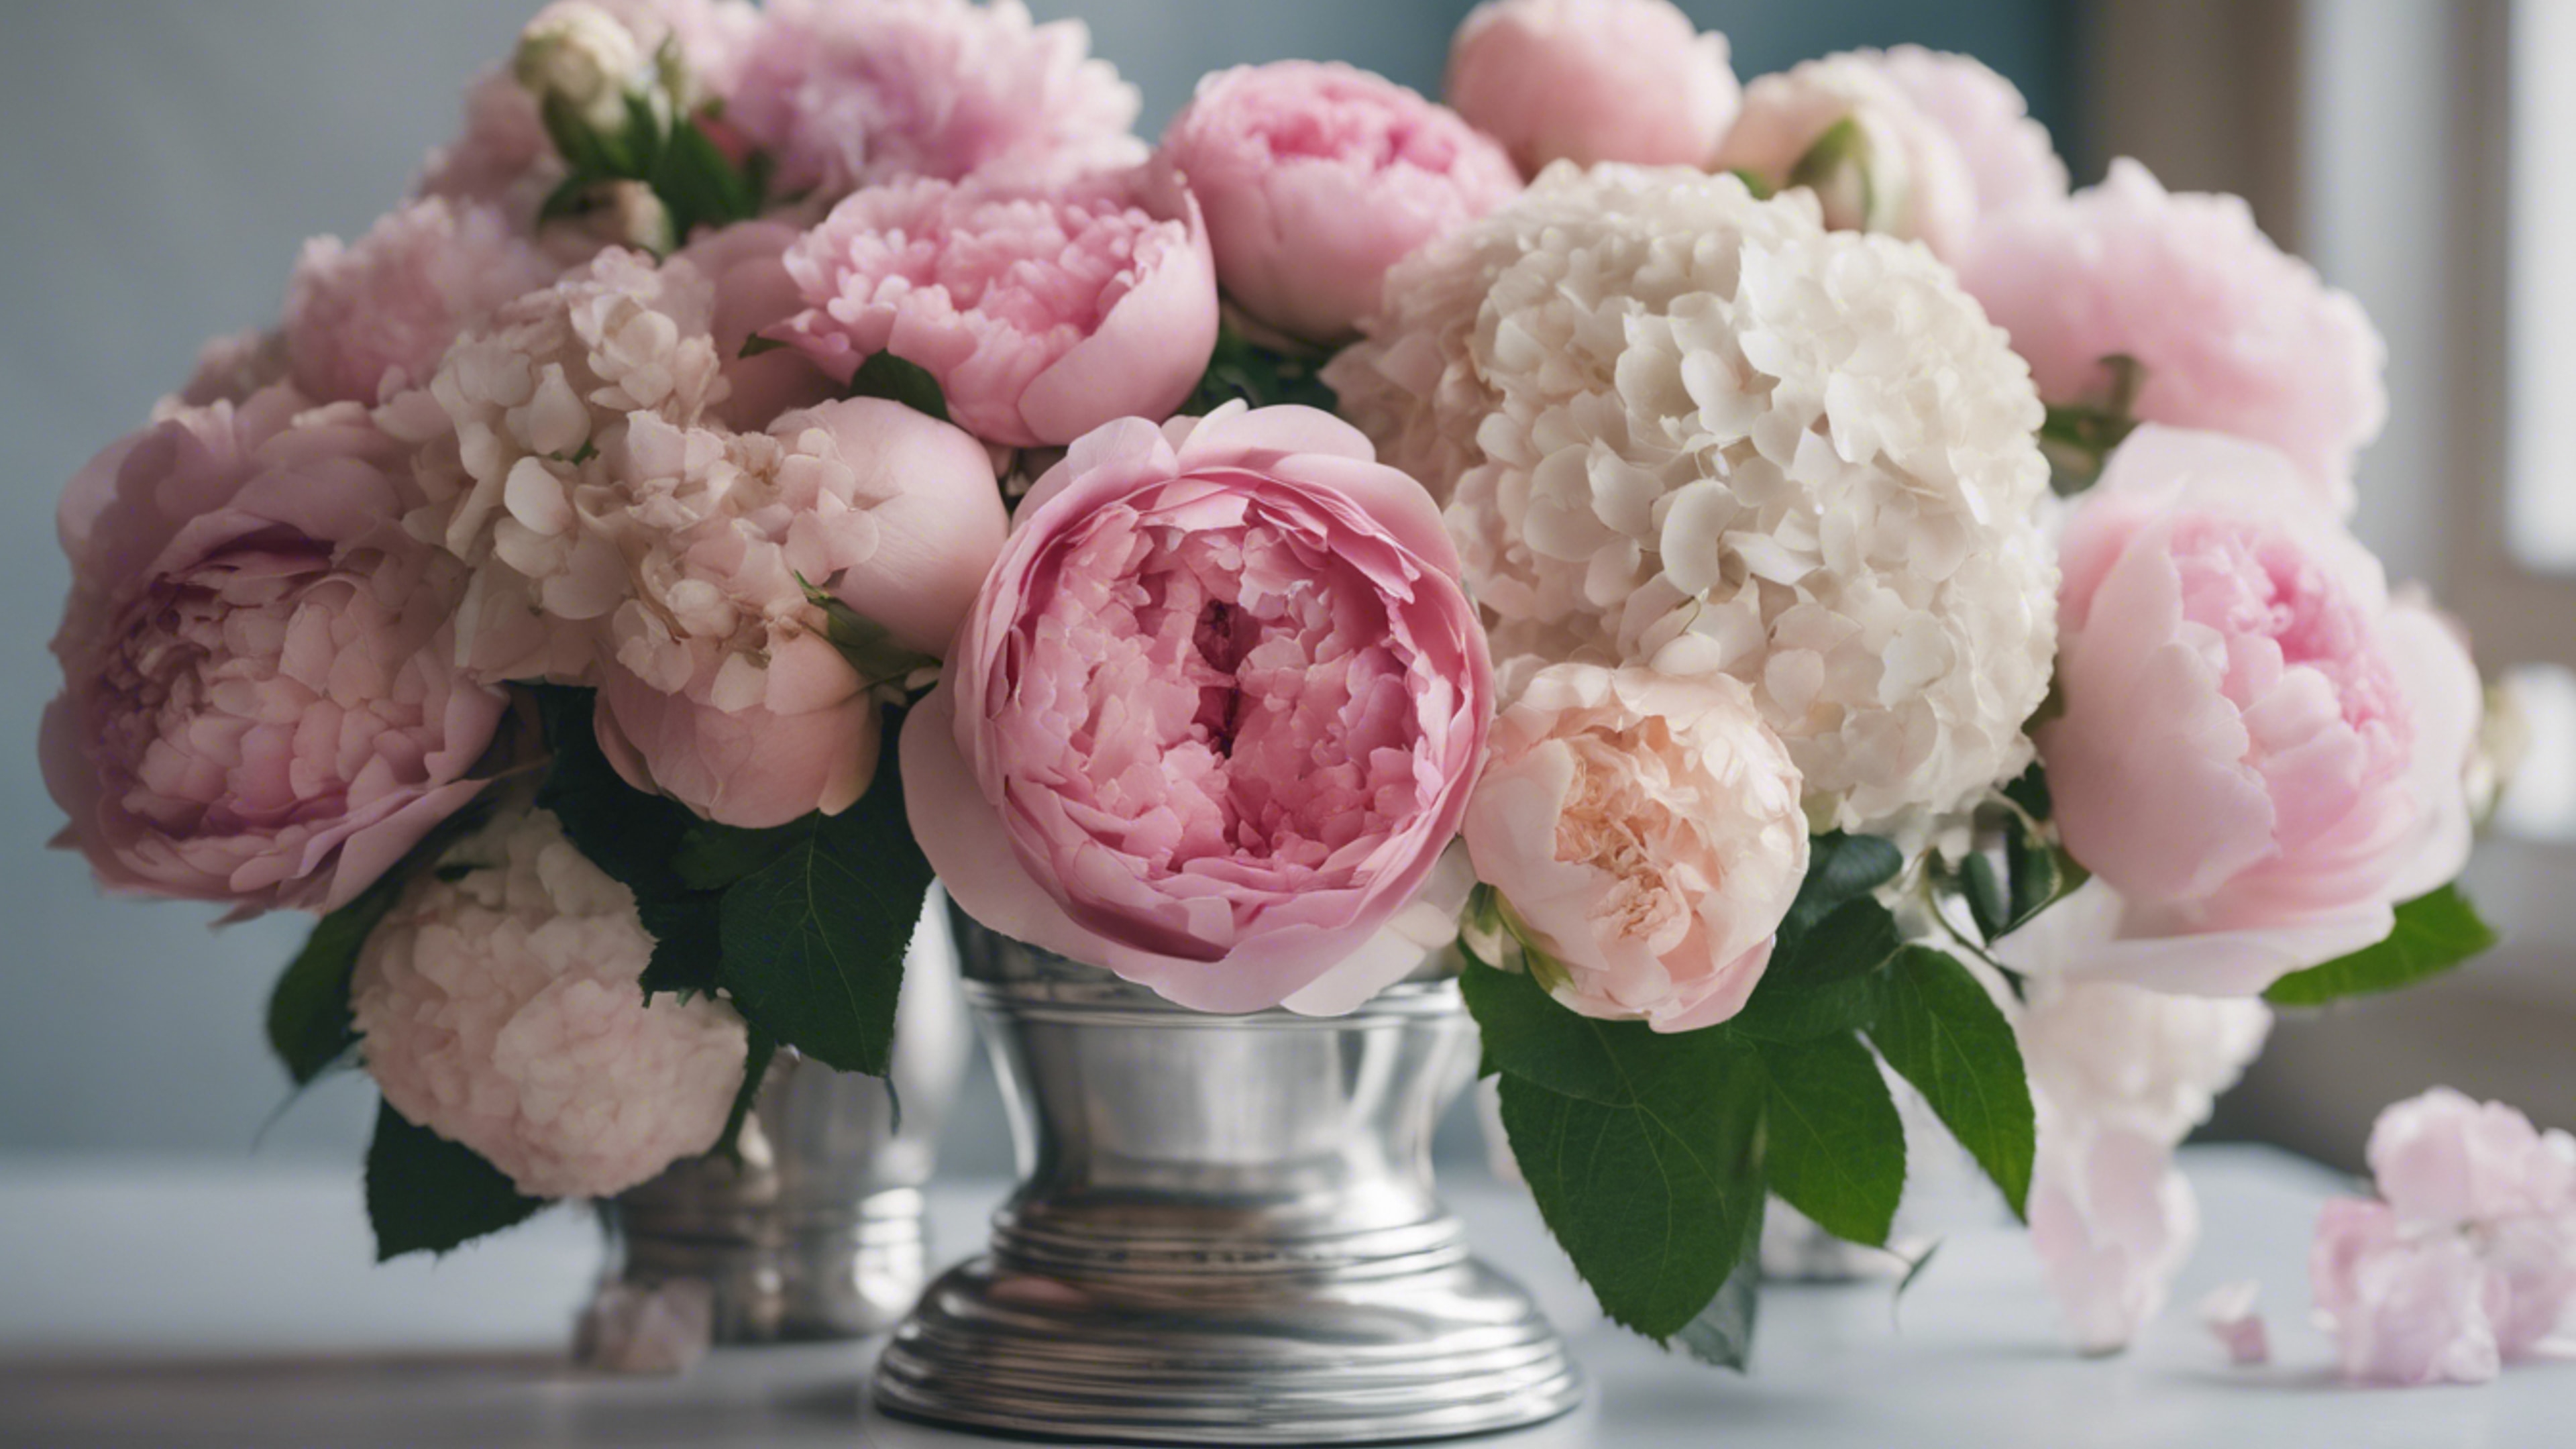 An arrangement of pink roses, peonies, and hydrangeas in a silver vase, embodying preppy elegance. Tapeta[810d260cf91945bd97fc]